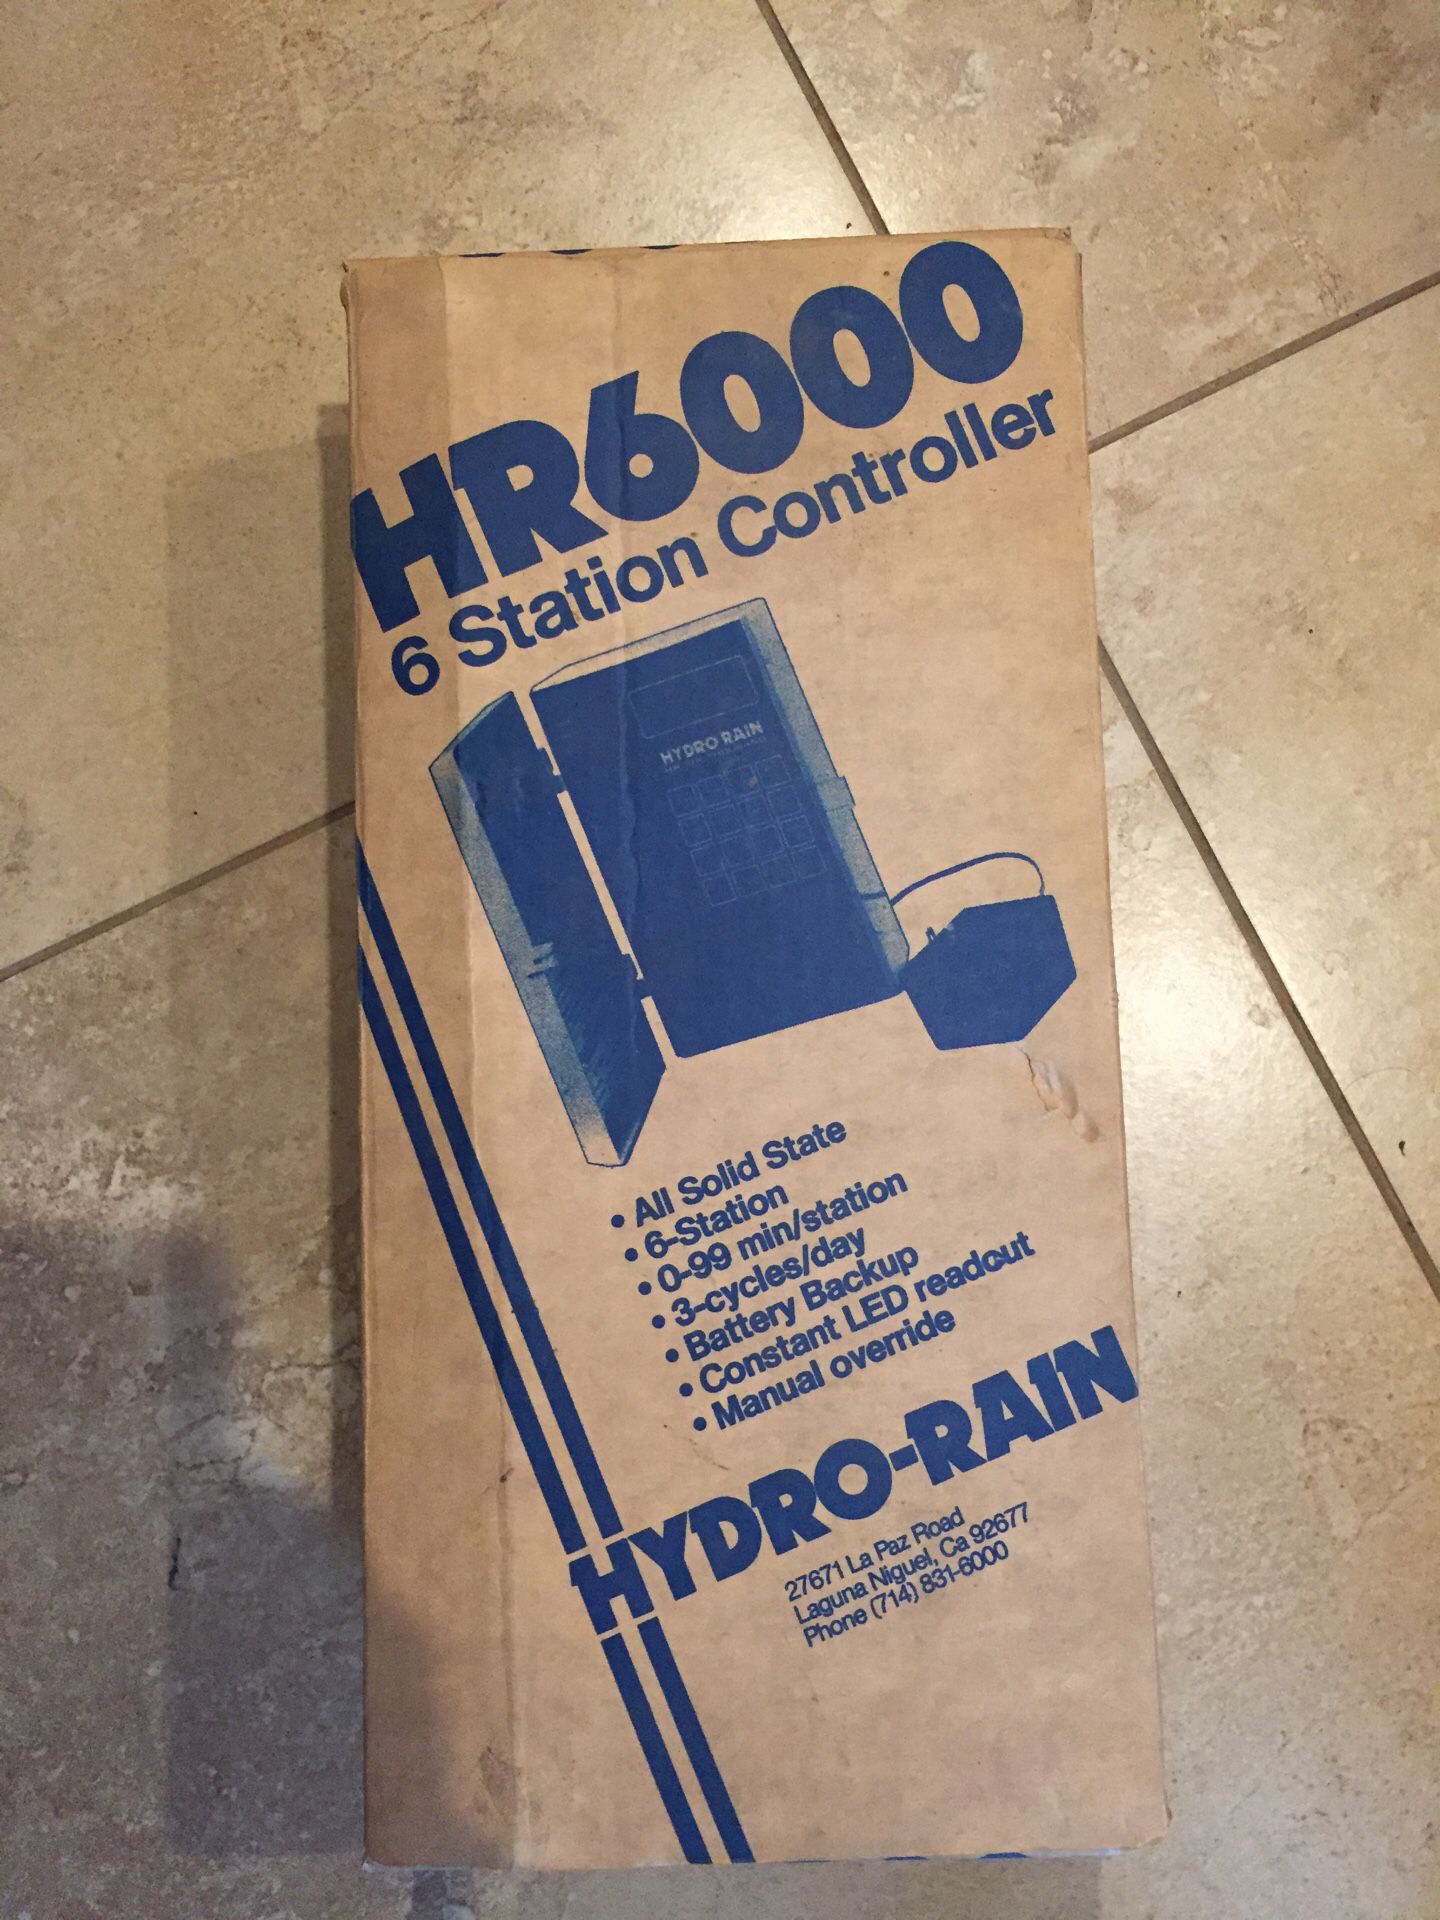 Hydro-Rain HR6000 6 Station Sprinkler Controller